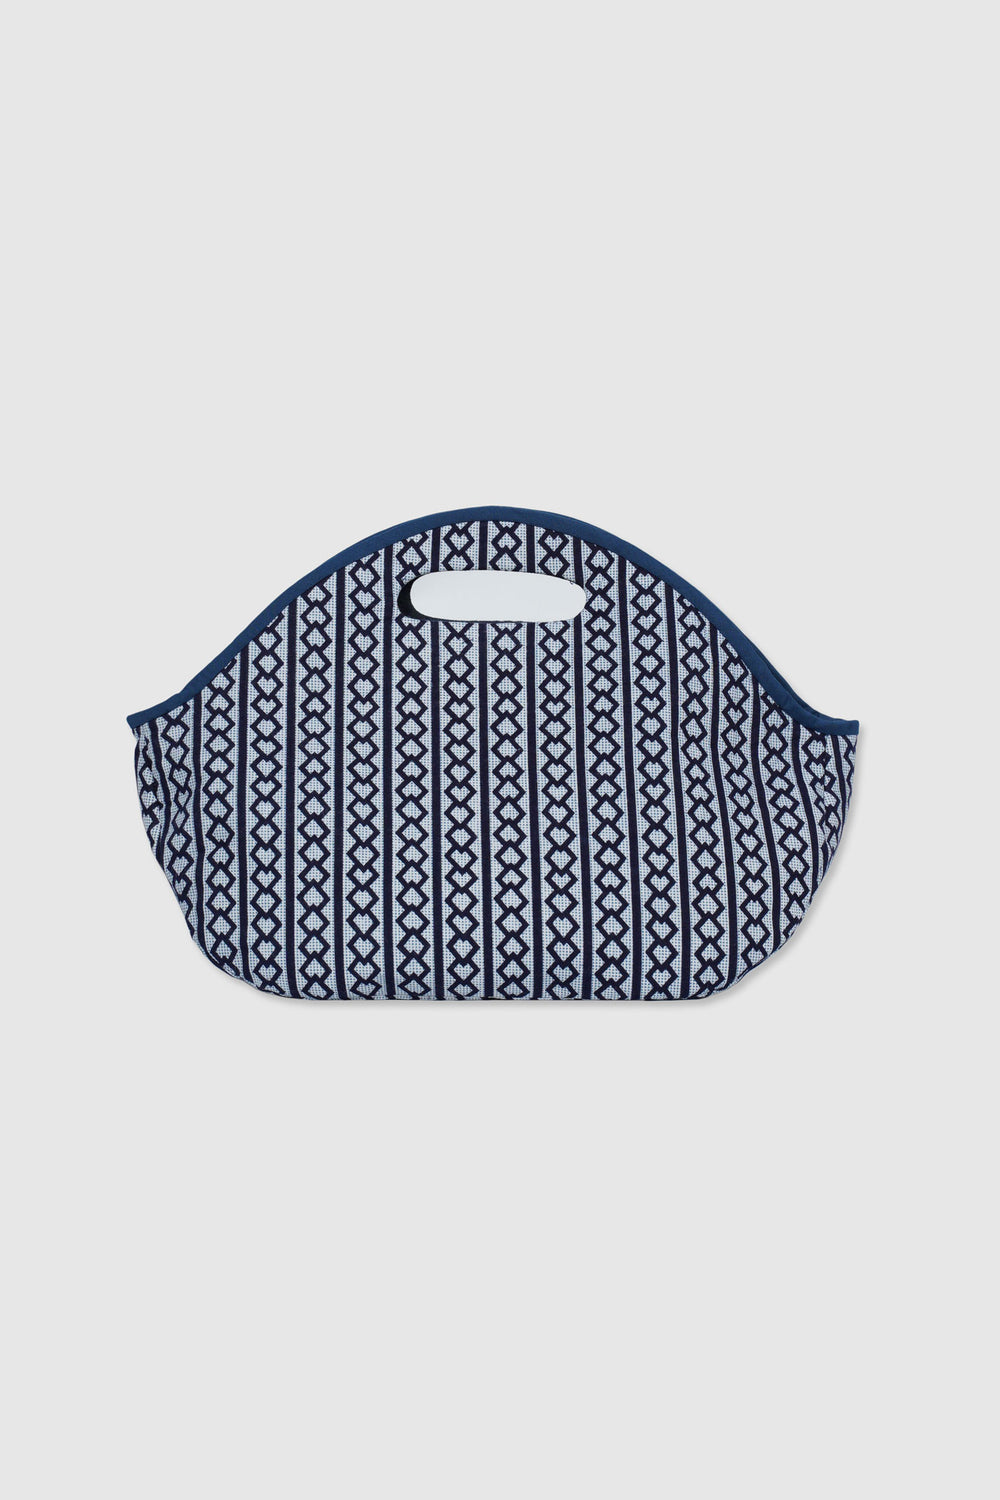 Japanese Cotton Geometric Print for a Contemporary Bag